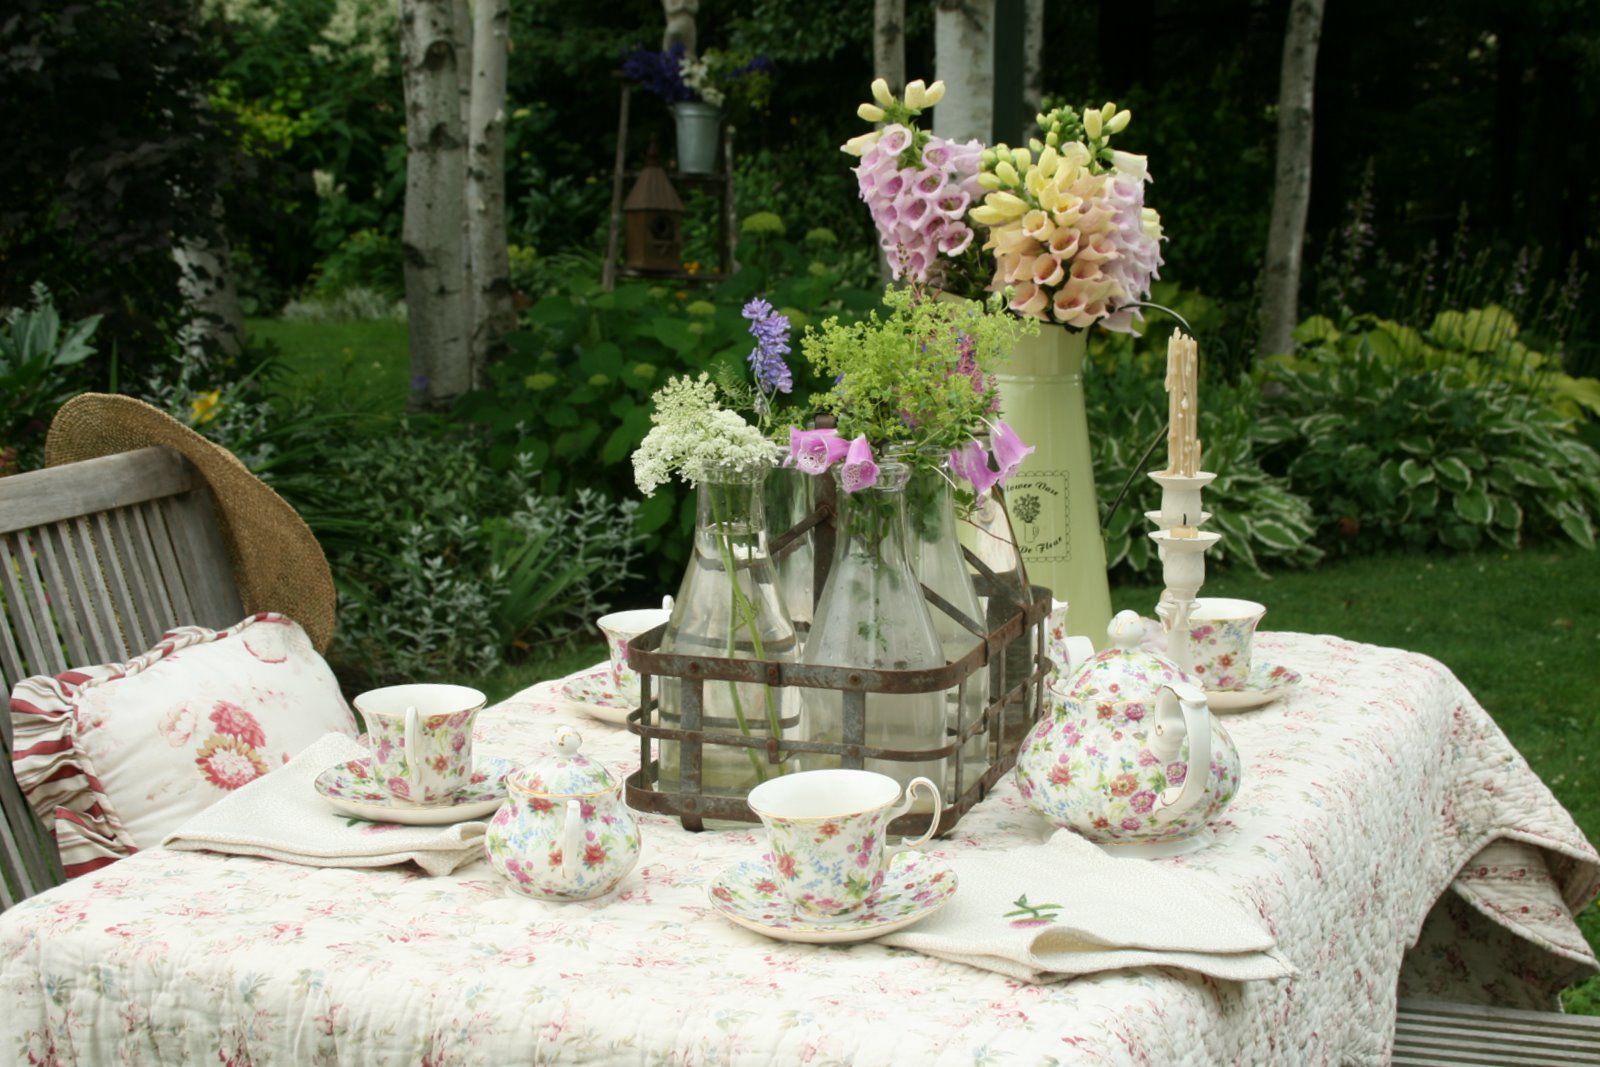 garden visit with afternoon tea